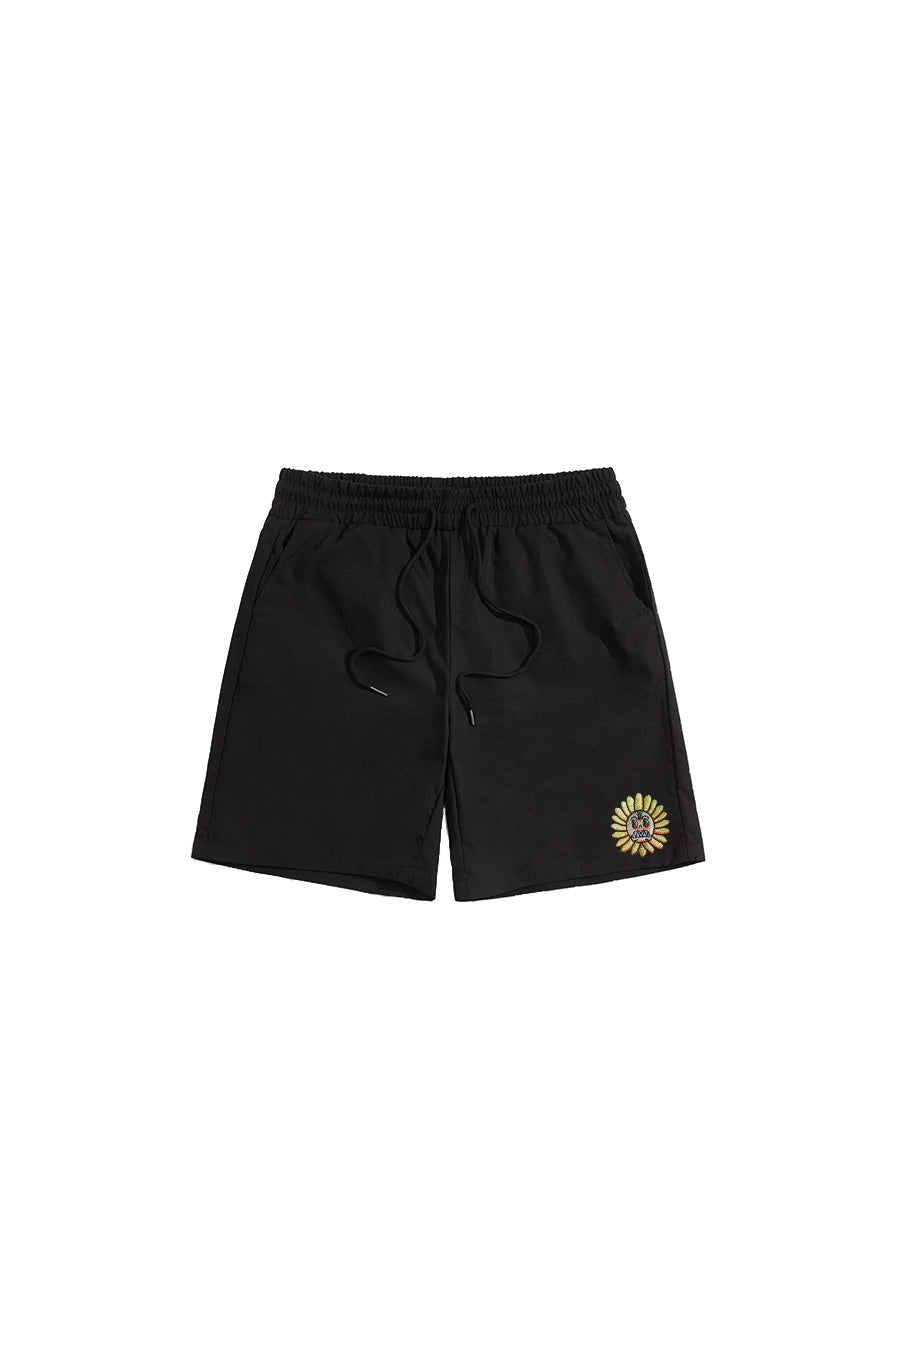 Black Shorts - Summer Club